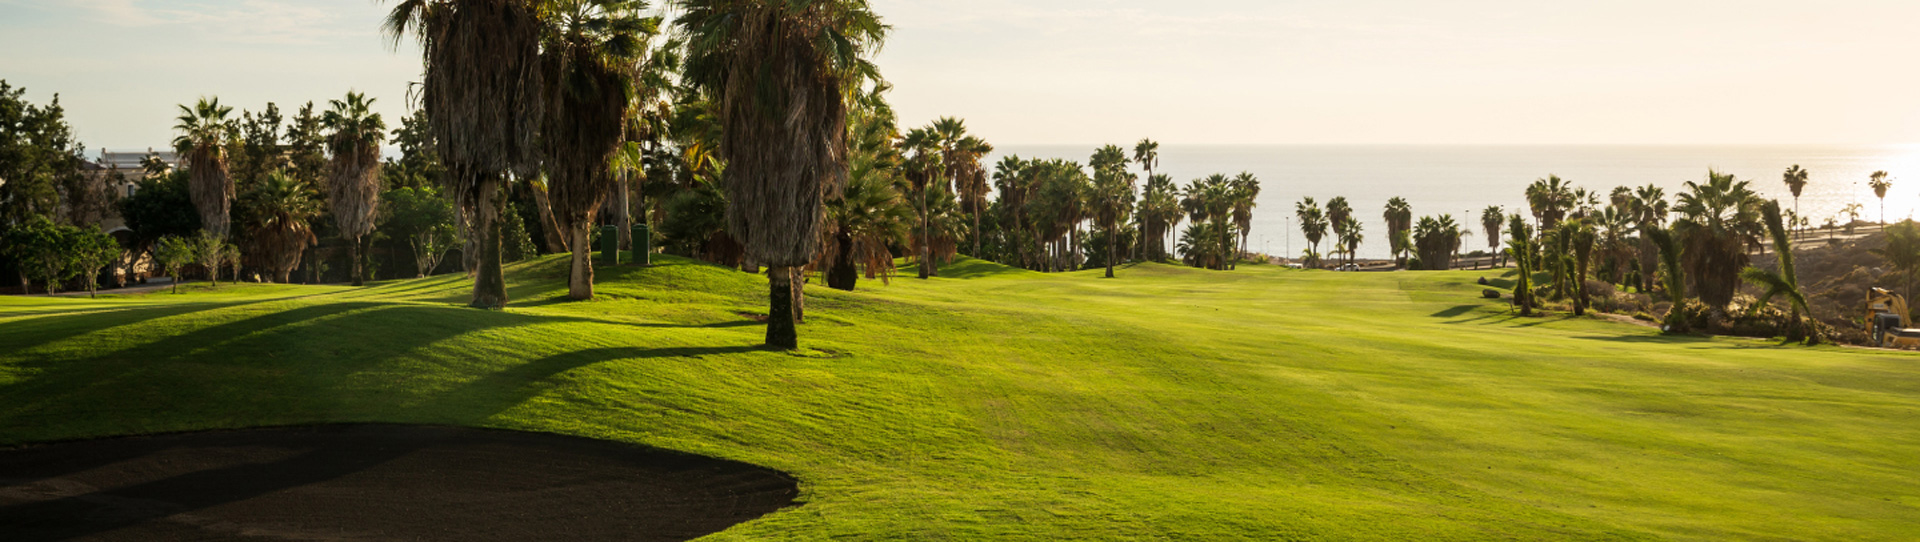 Spain golf courses - Costa Adeje Championship Golf Course - Photo 3